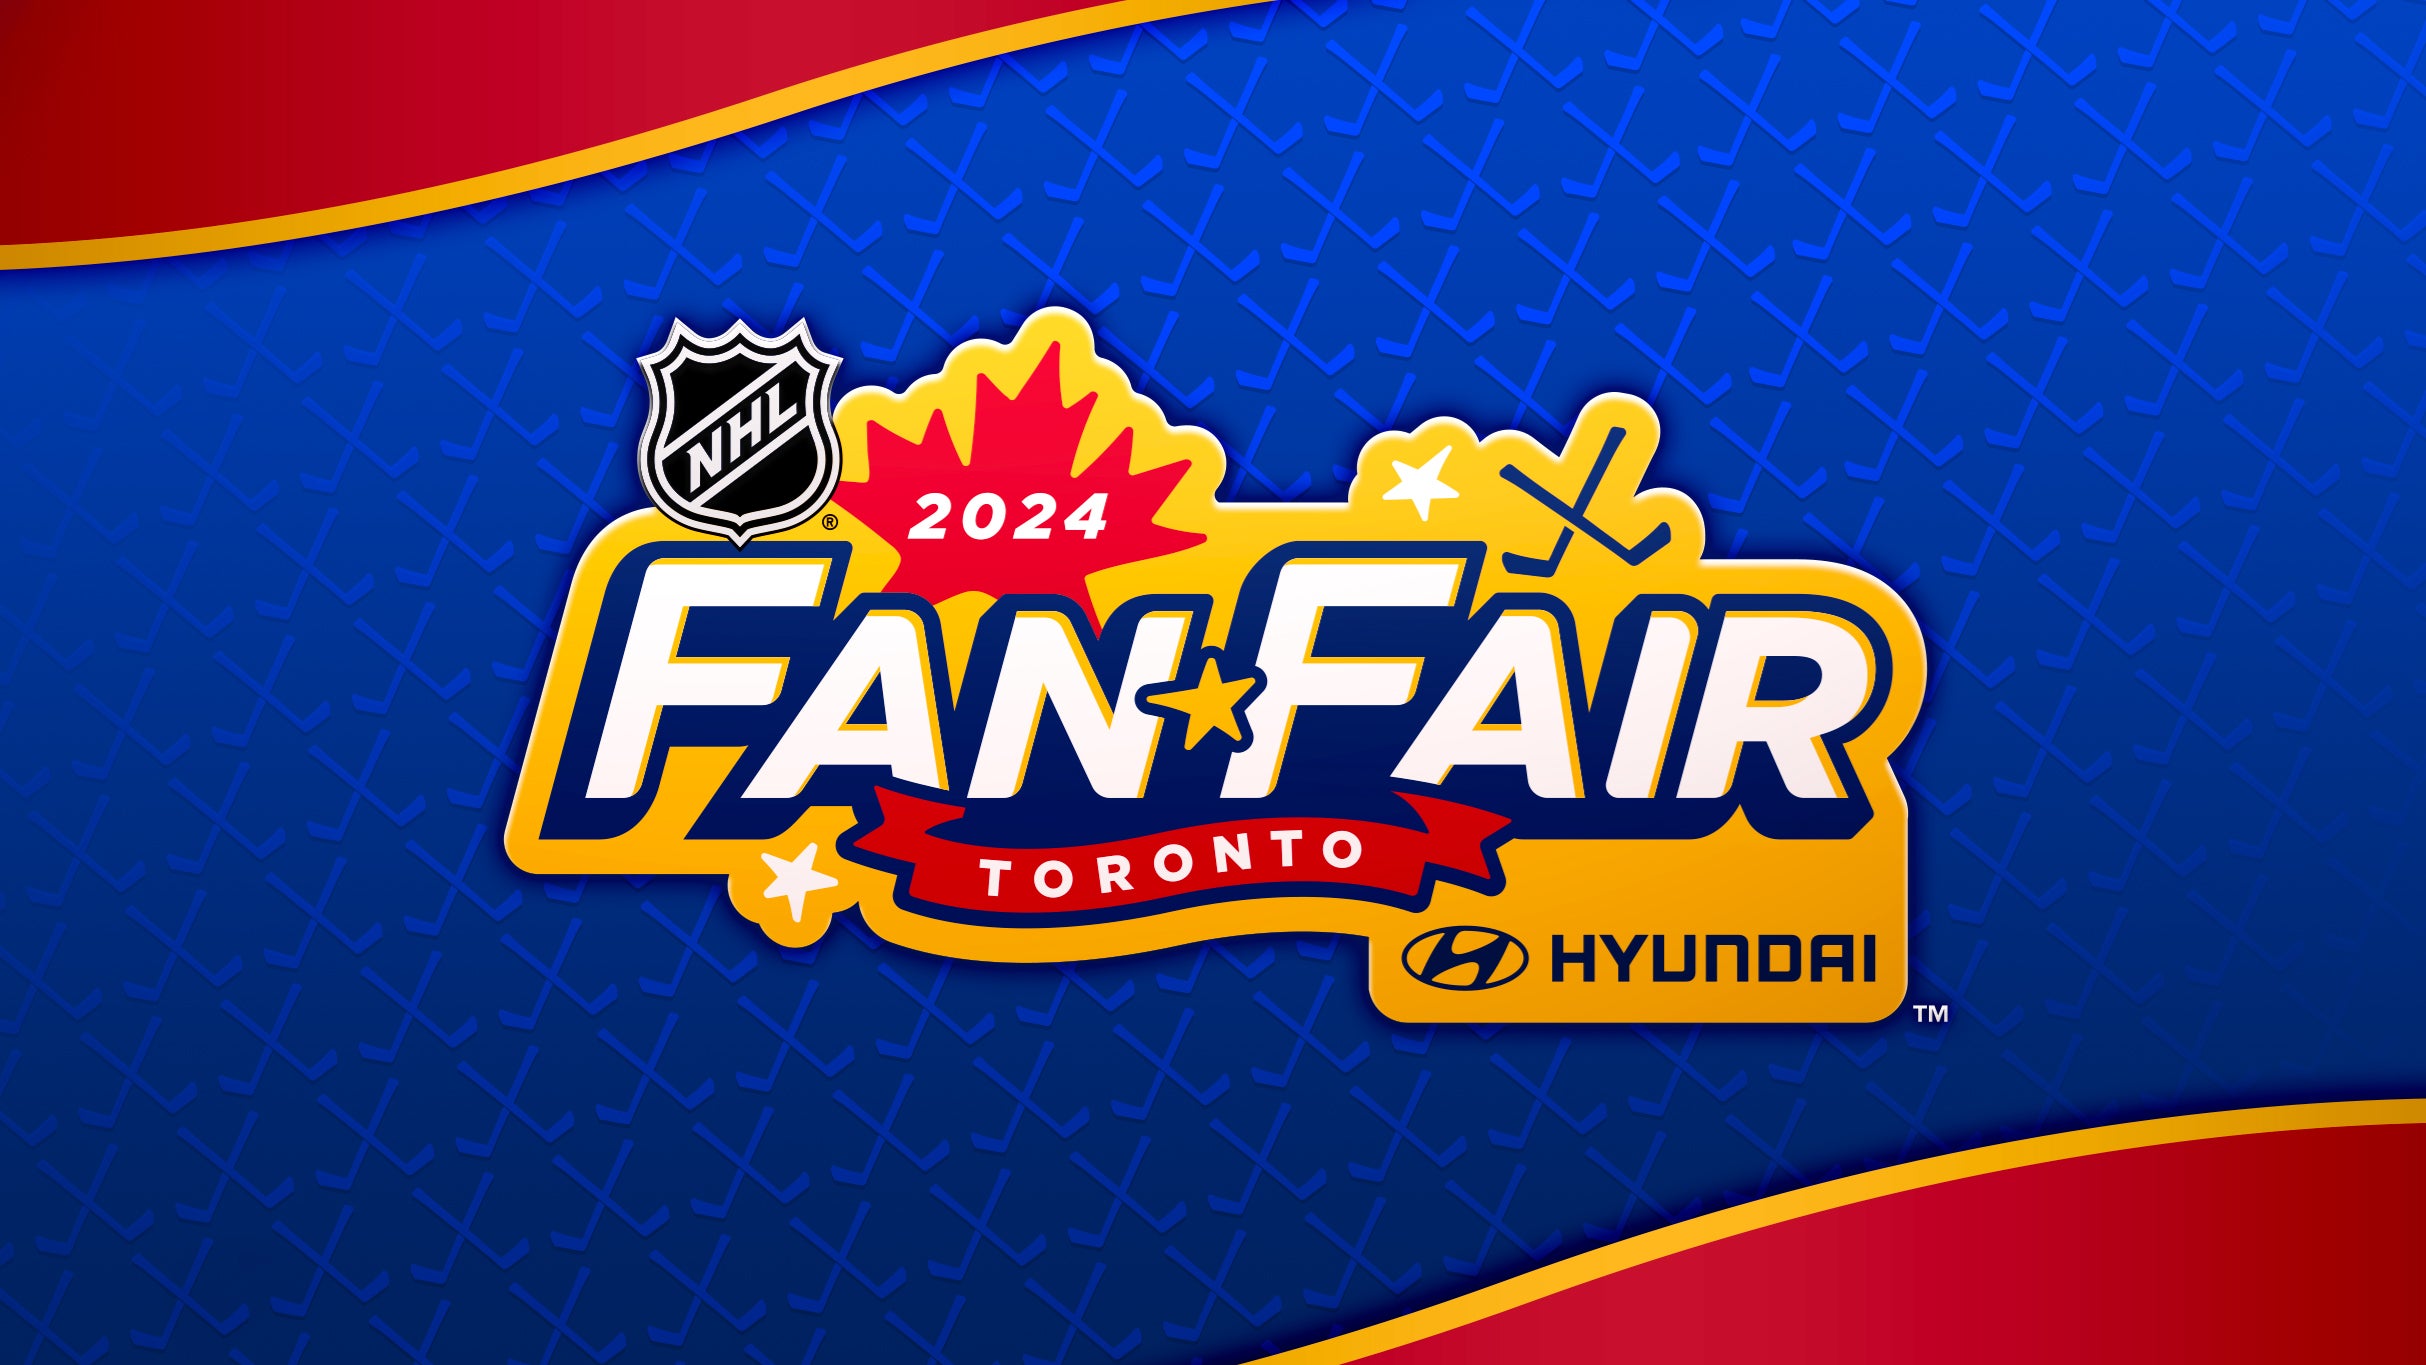 2024 Hyundai NHL Fan Fair - Sunday 11:00 AM - 4:00 PM in Toronto promo photo for Metrolinx presale offer code